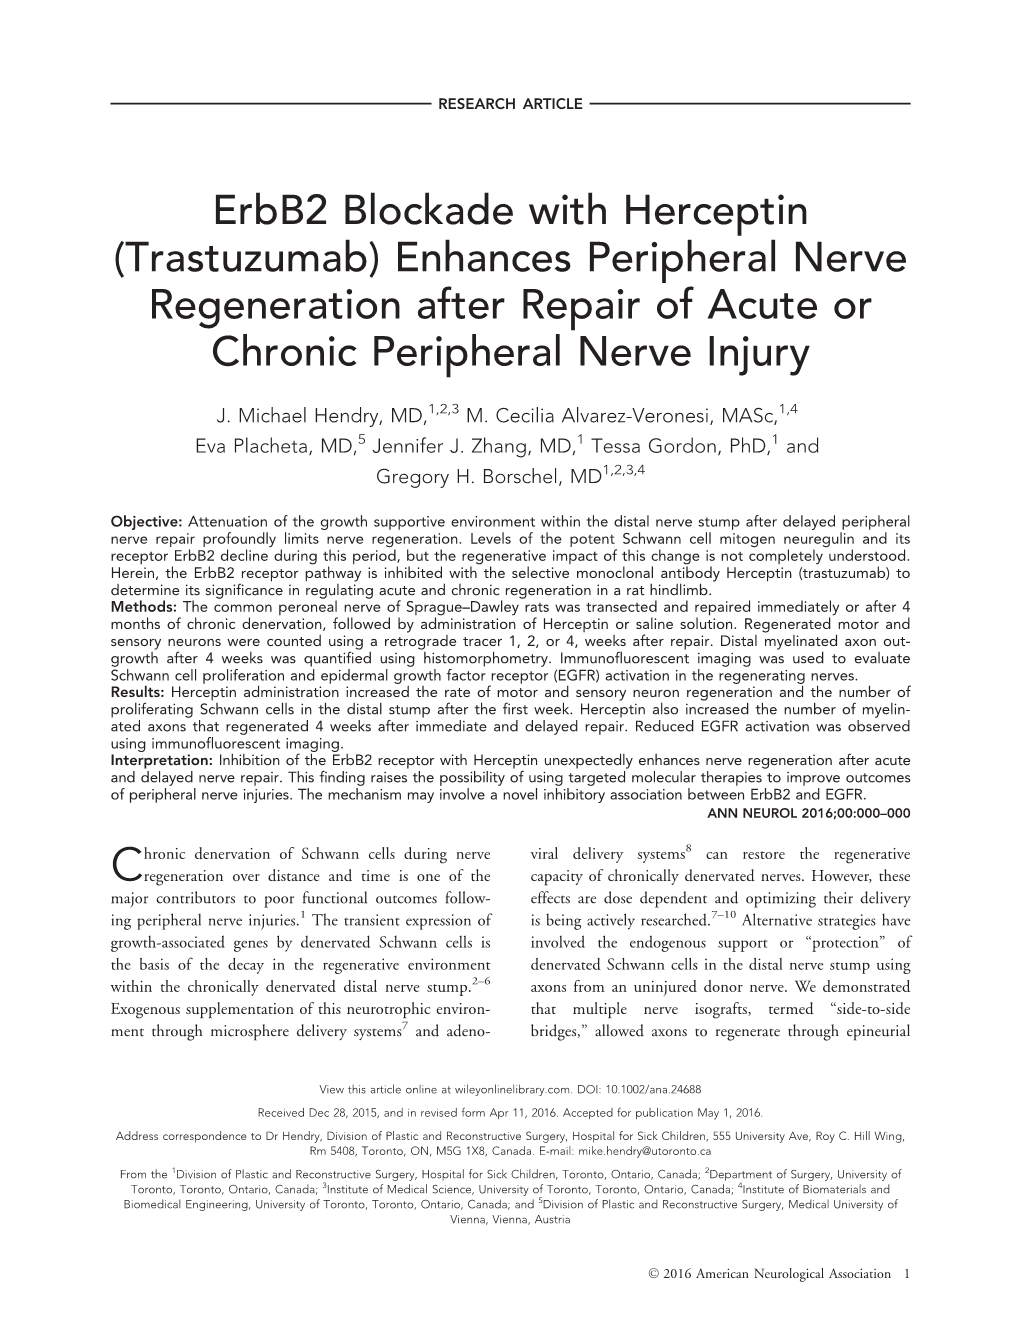 Herceptin Enhances Nerve Regeneration Following Acute and Chronic Denervation